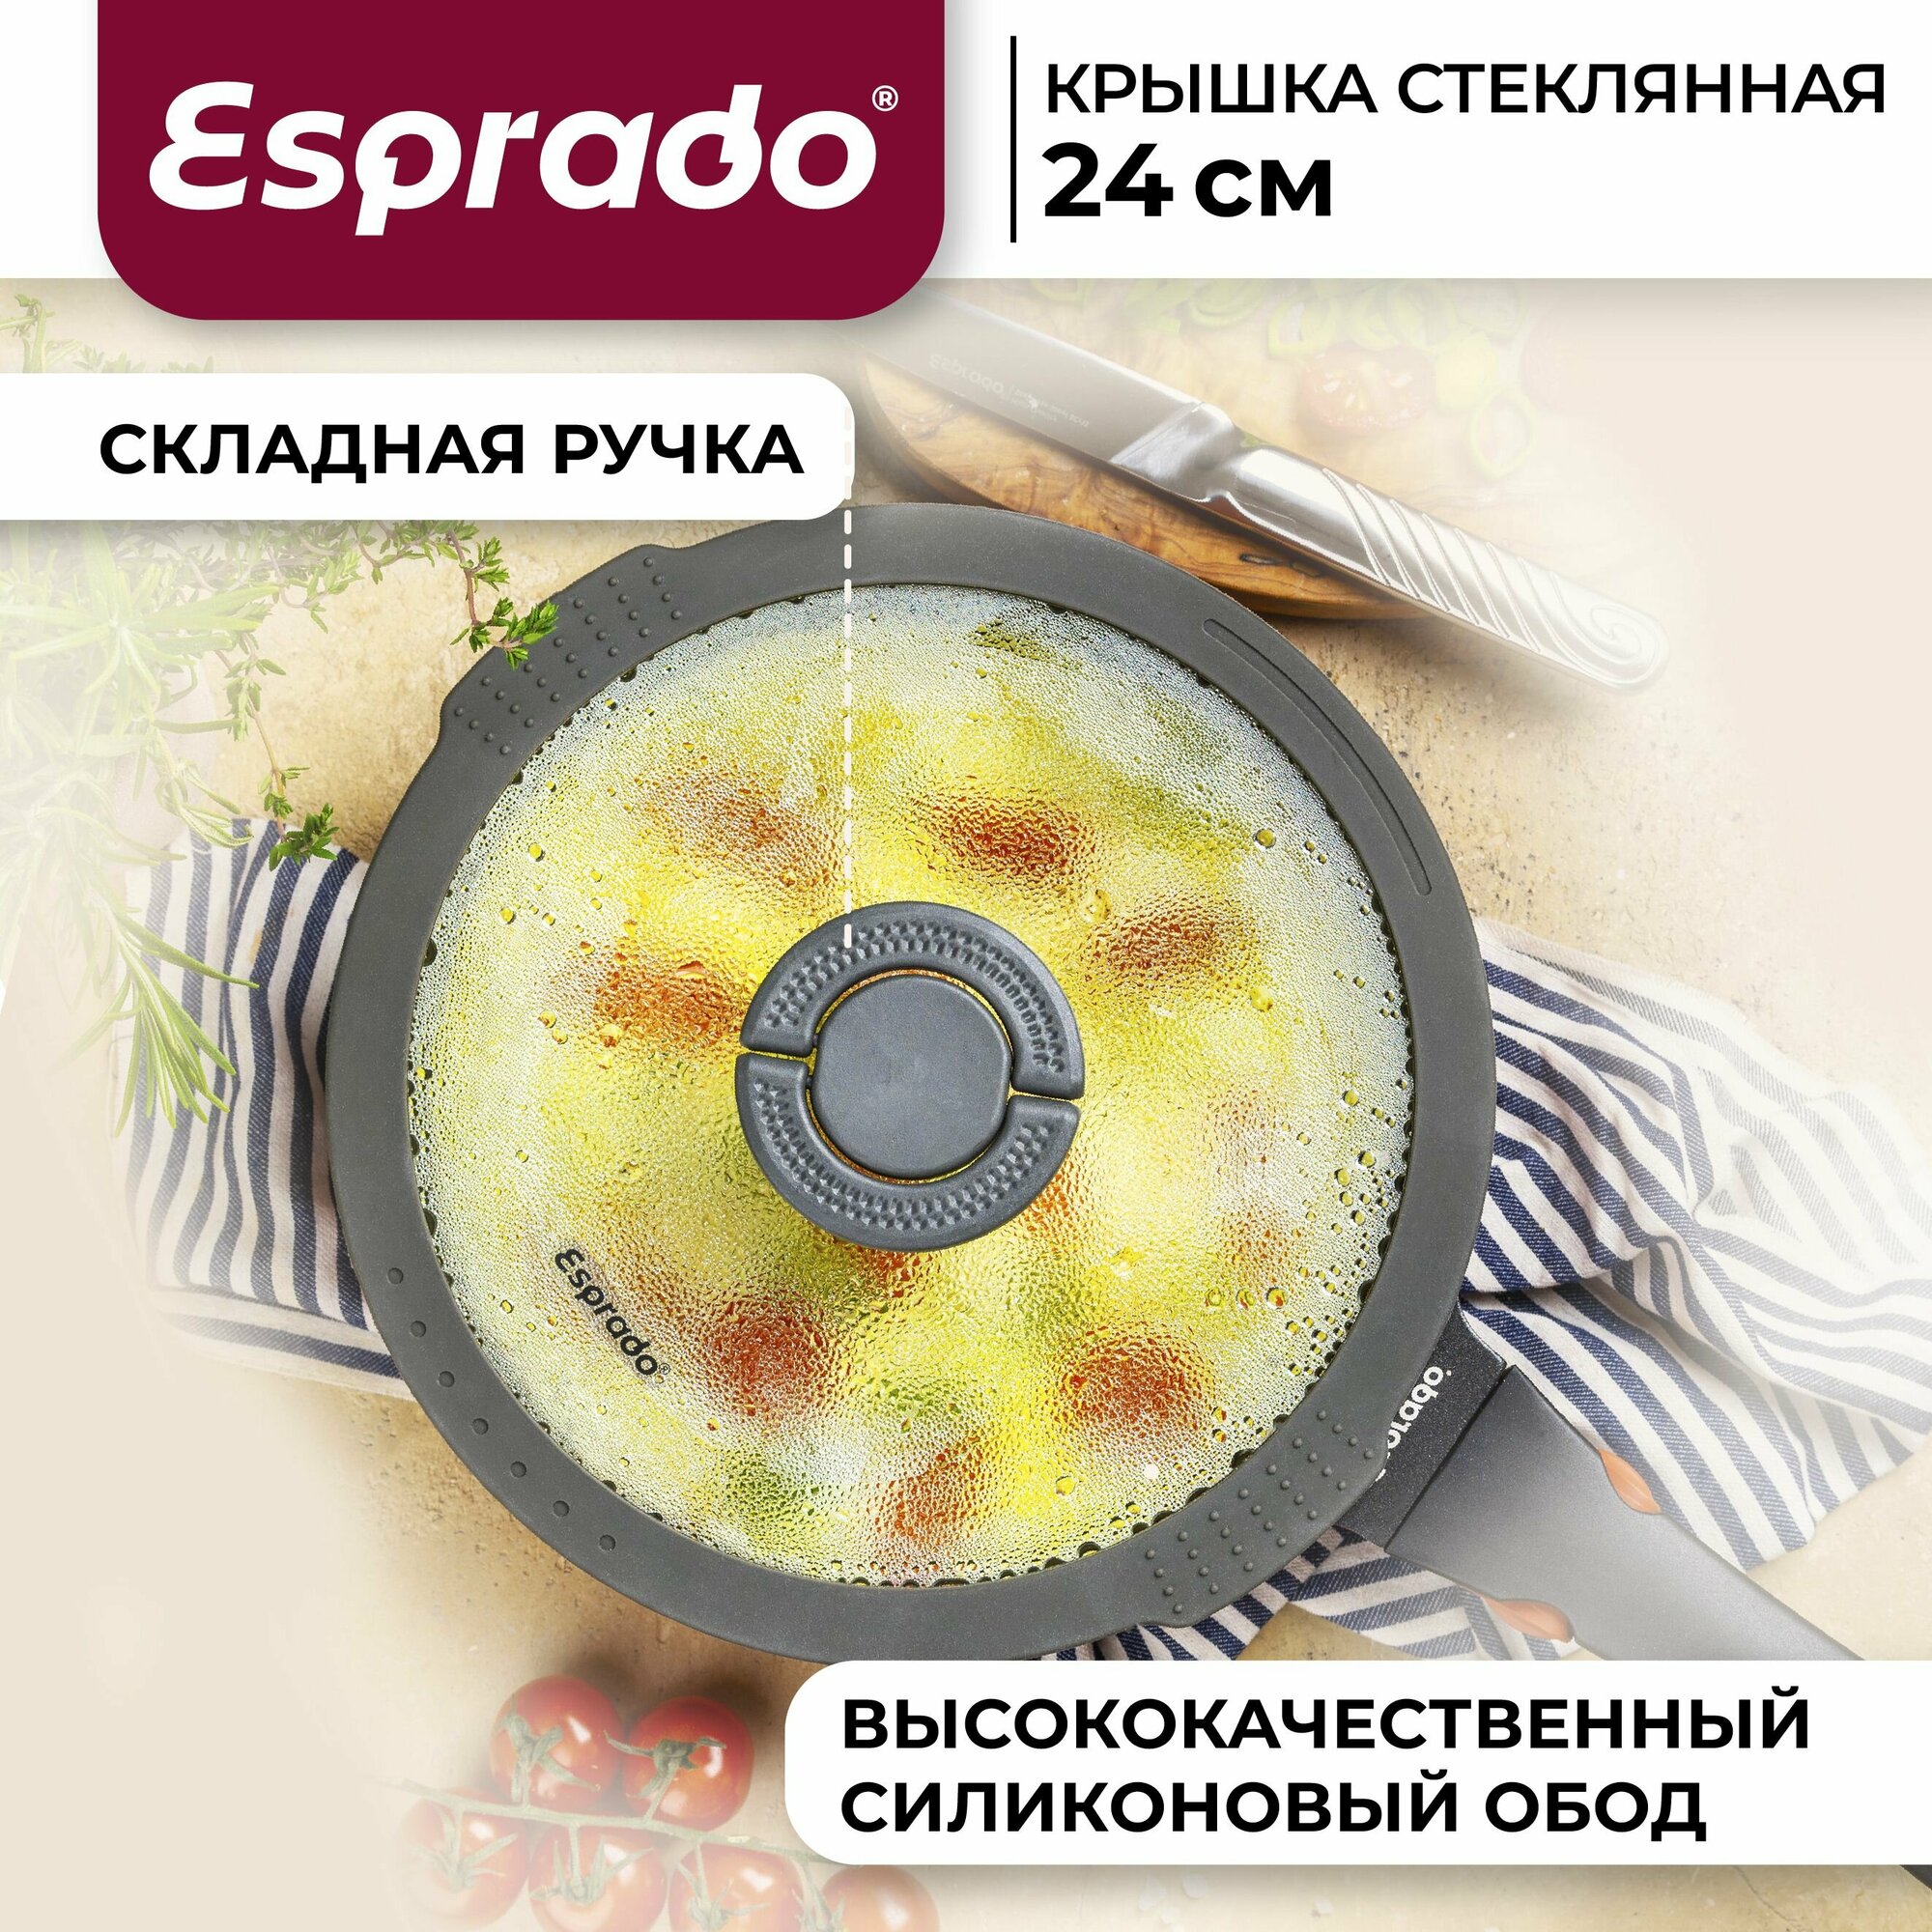 Крышка, крышка для сковороды, крышка 24 см , крышки, крышка стеклянная, кухонная крышка, стеклянная крышка для сковороды Esprado Practico